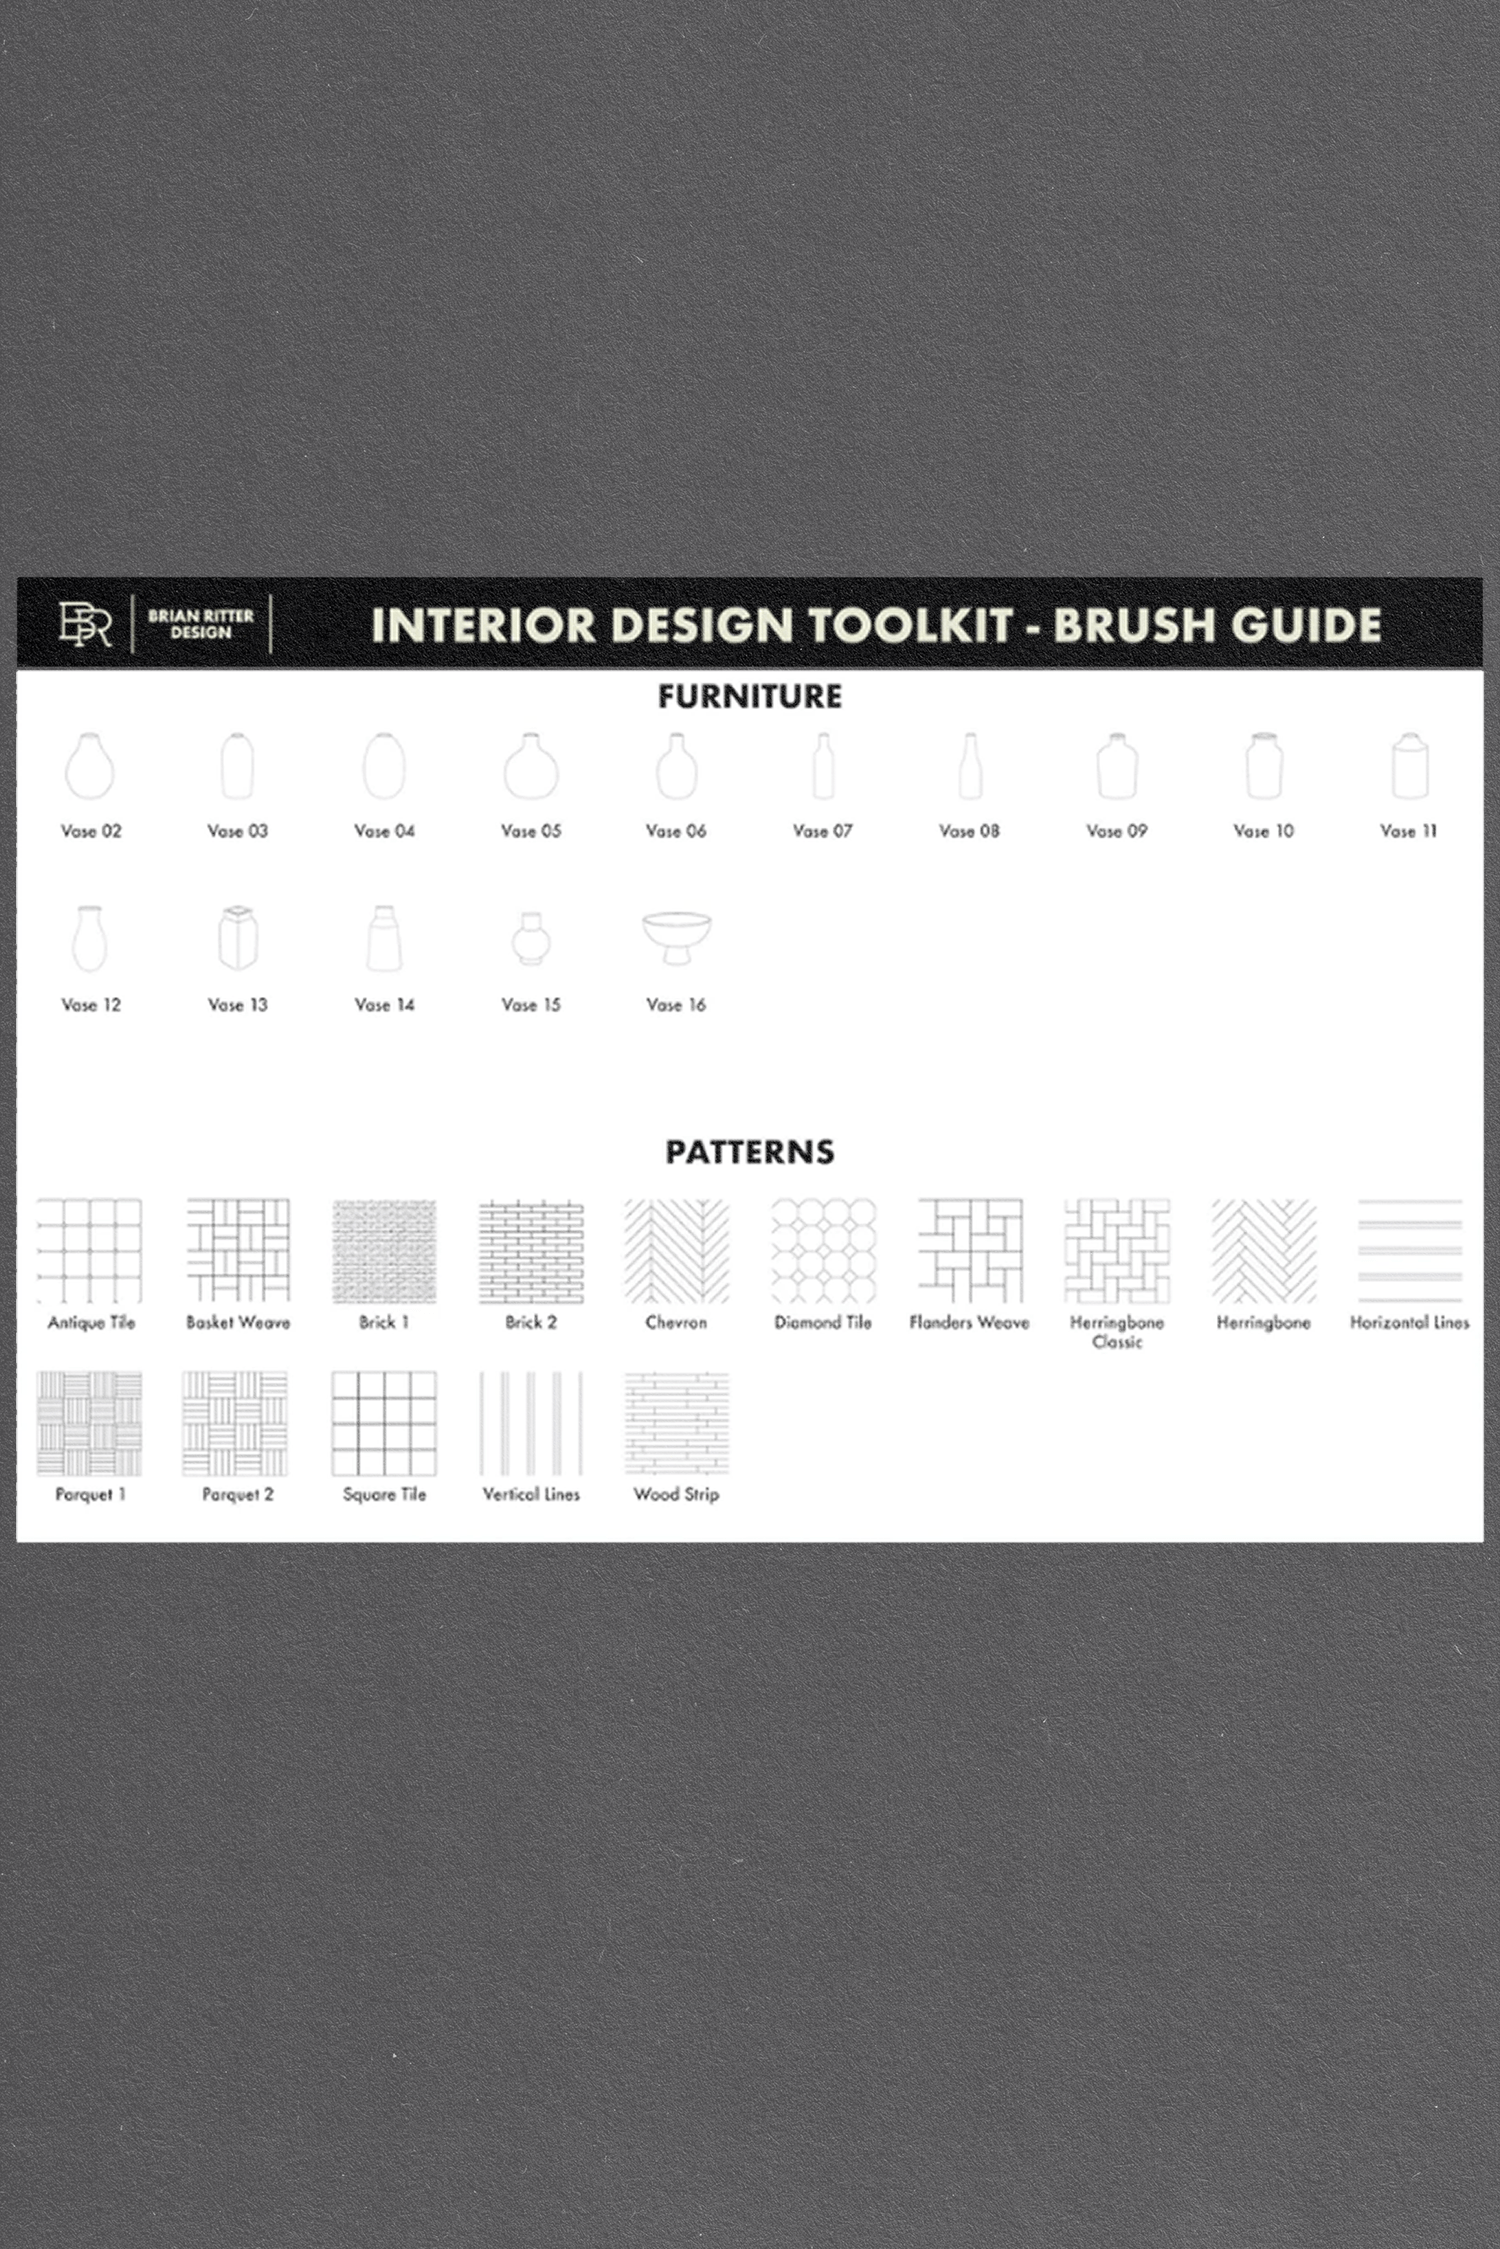 Interior Design ToolKit By Brian Ritter Design